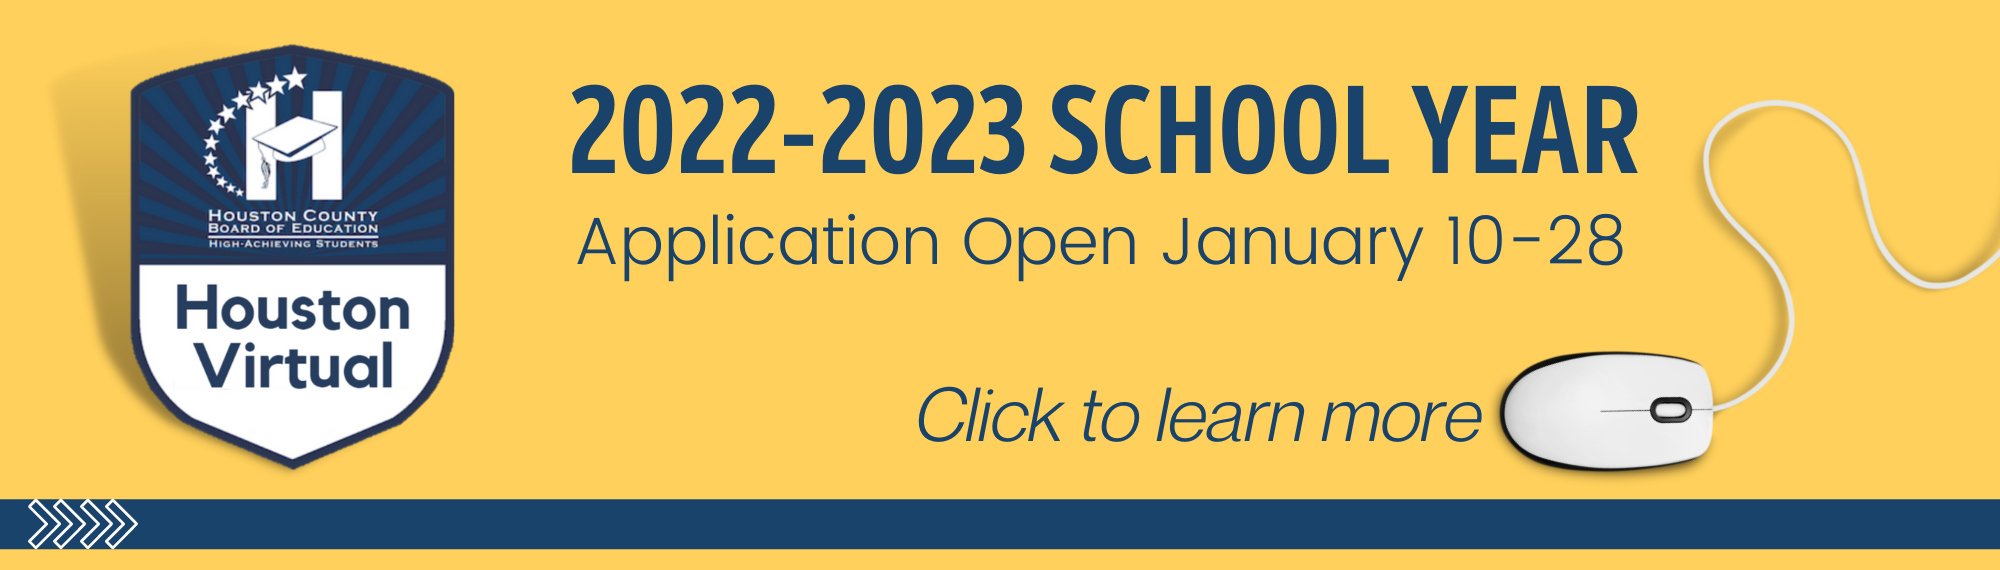 Hcbe Calendar 2022 Home - Houston County Schools